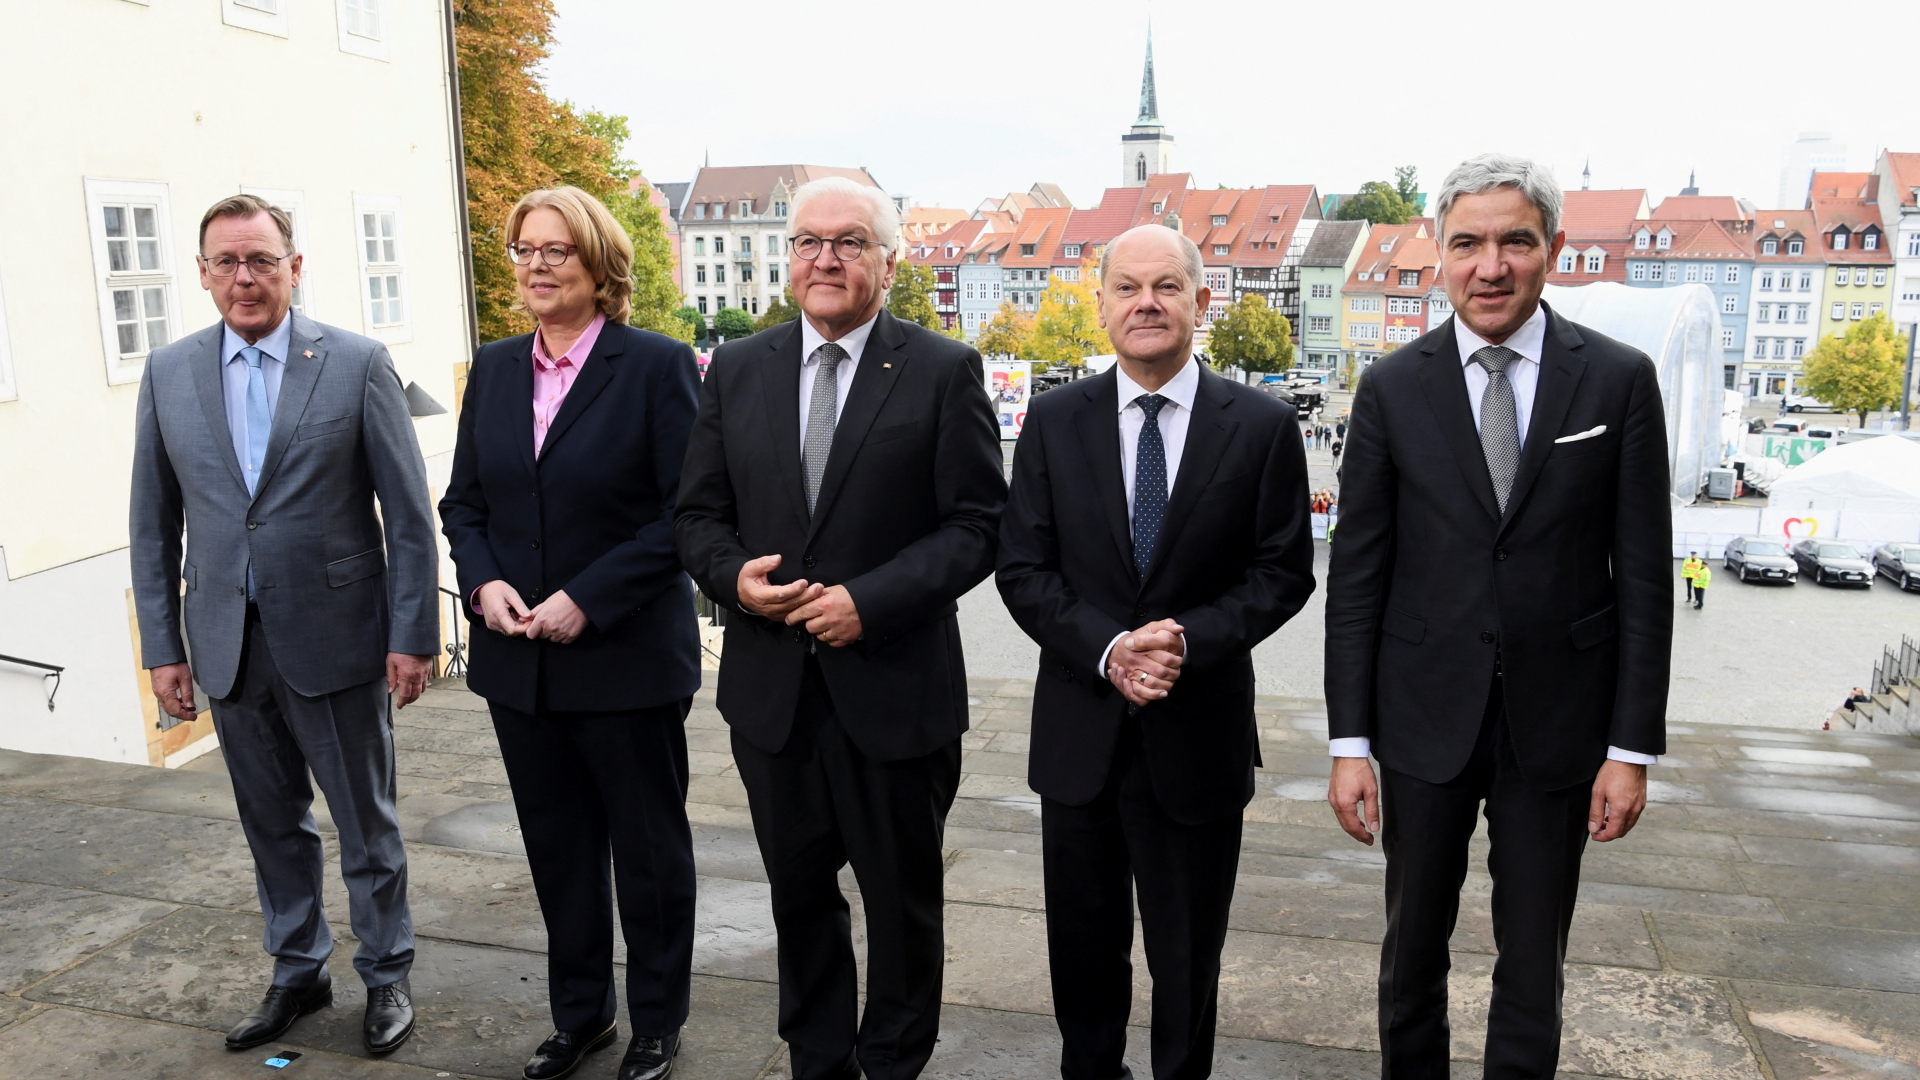 Bodo Ramelow, Bärbel Bas, Frank-Walter Steinmeier, Olaf Scholz and Stephan Harbarth vor dem Erfurter Dom